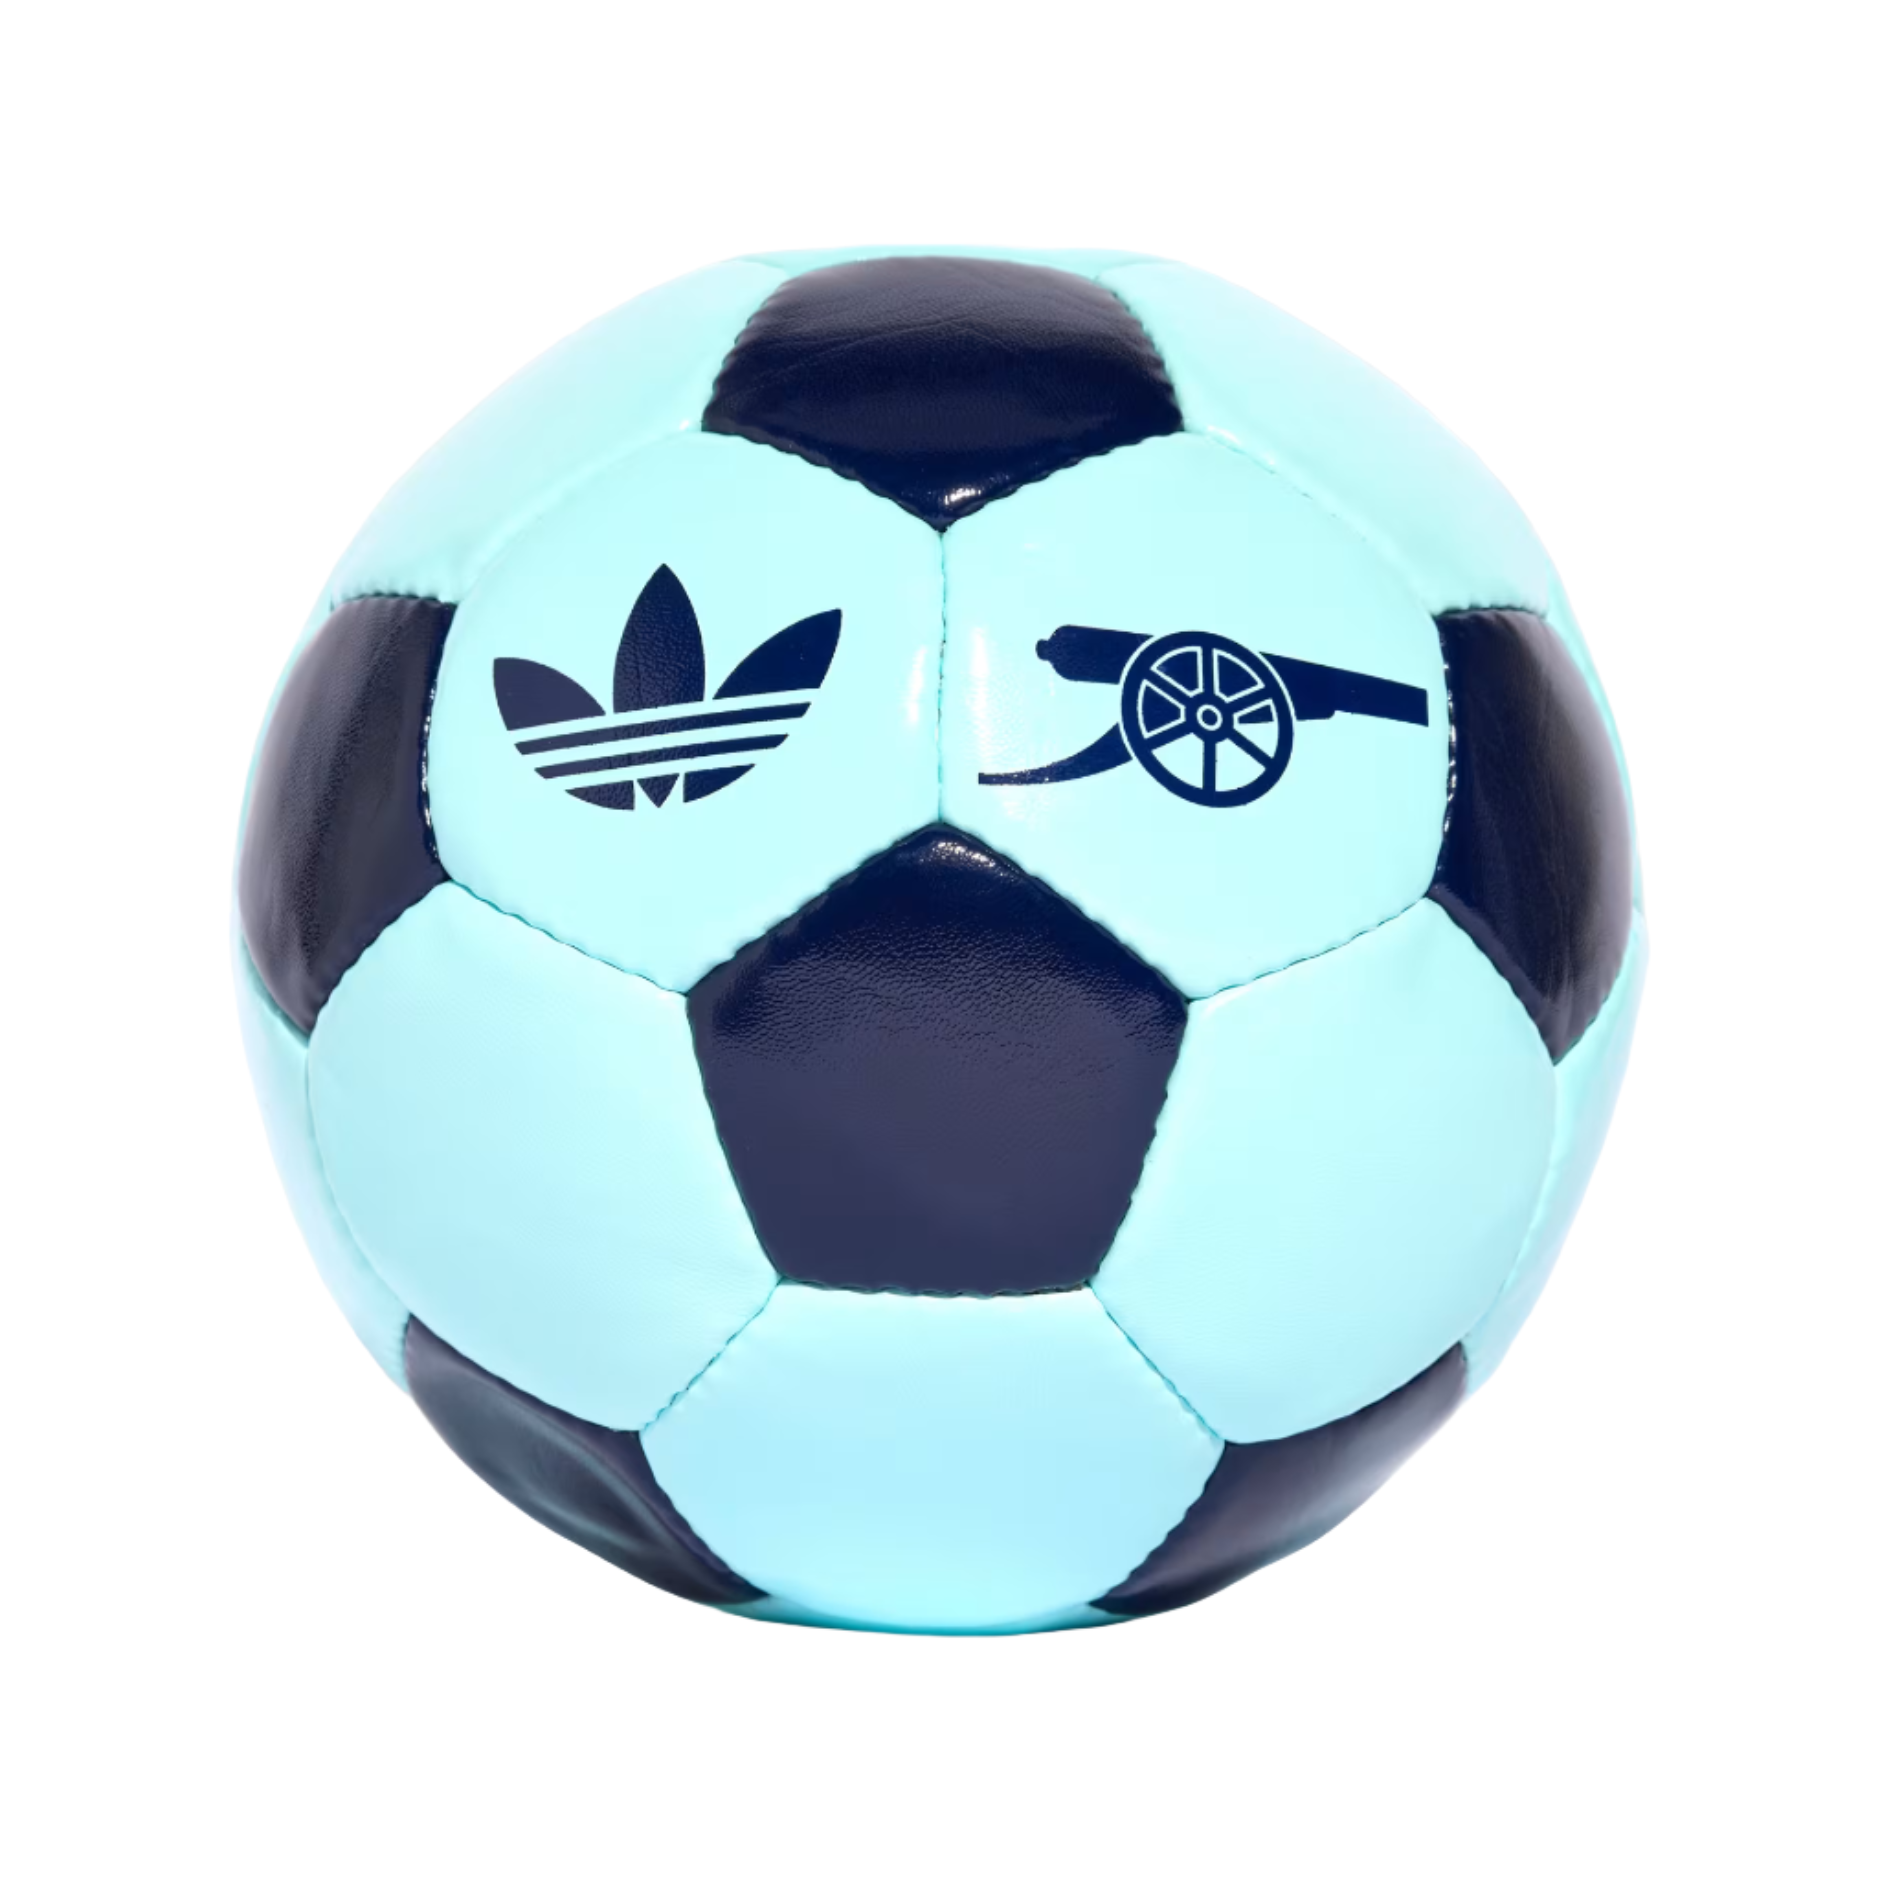 Adidas Arsenal Club Soccer Ball